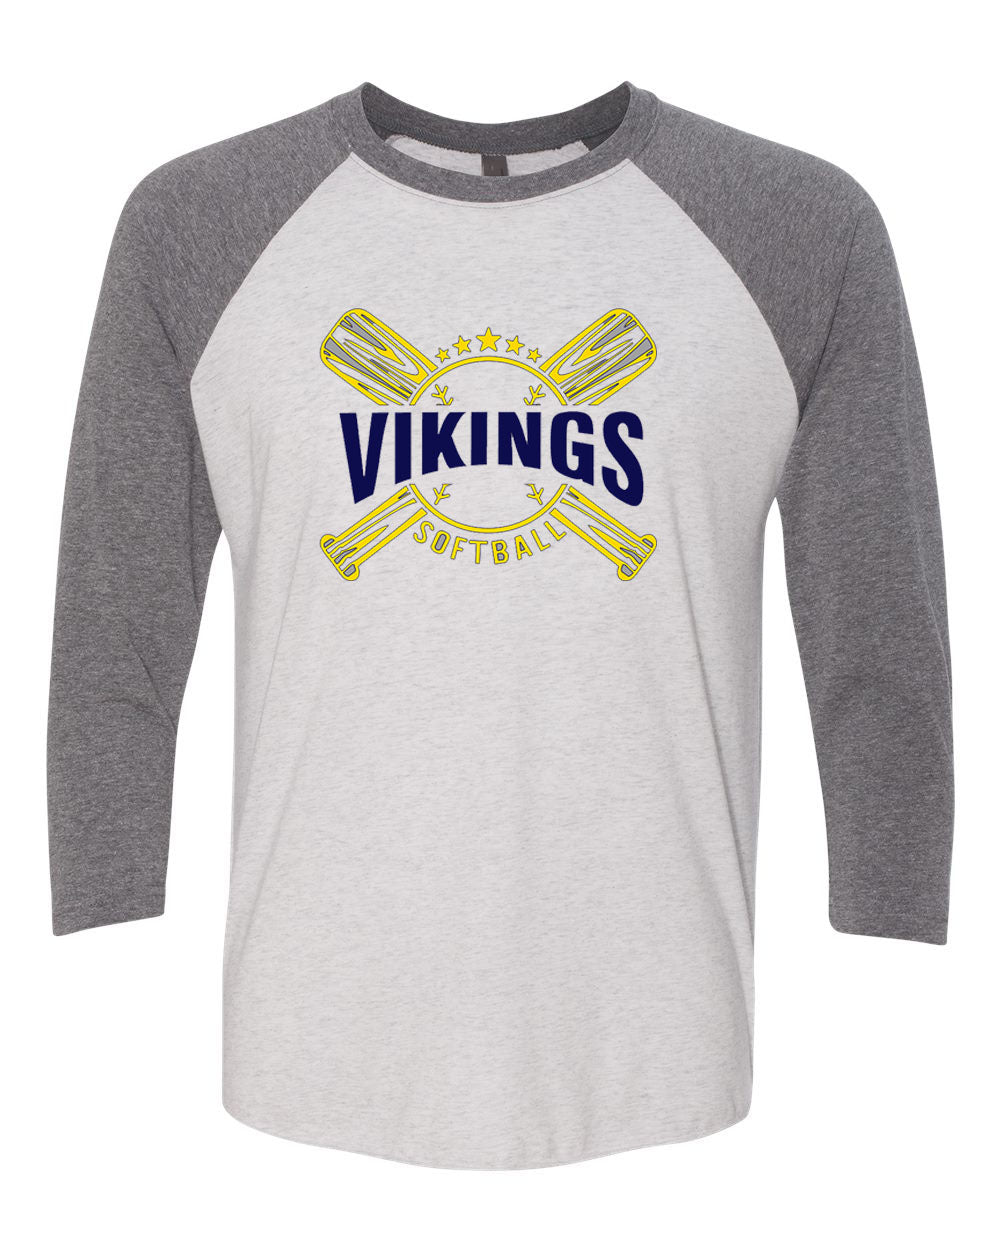 Viking Bats Softball raglan shirt